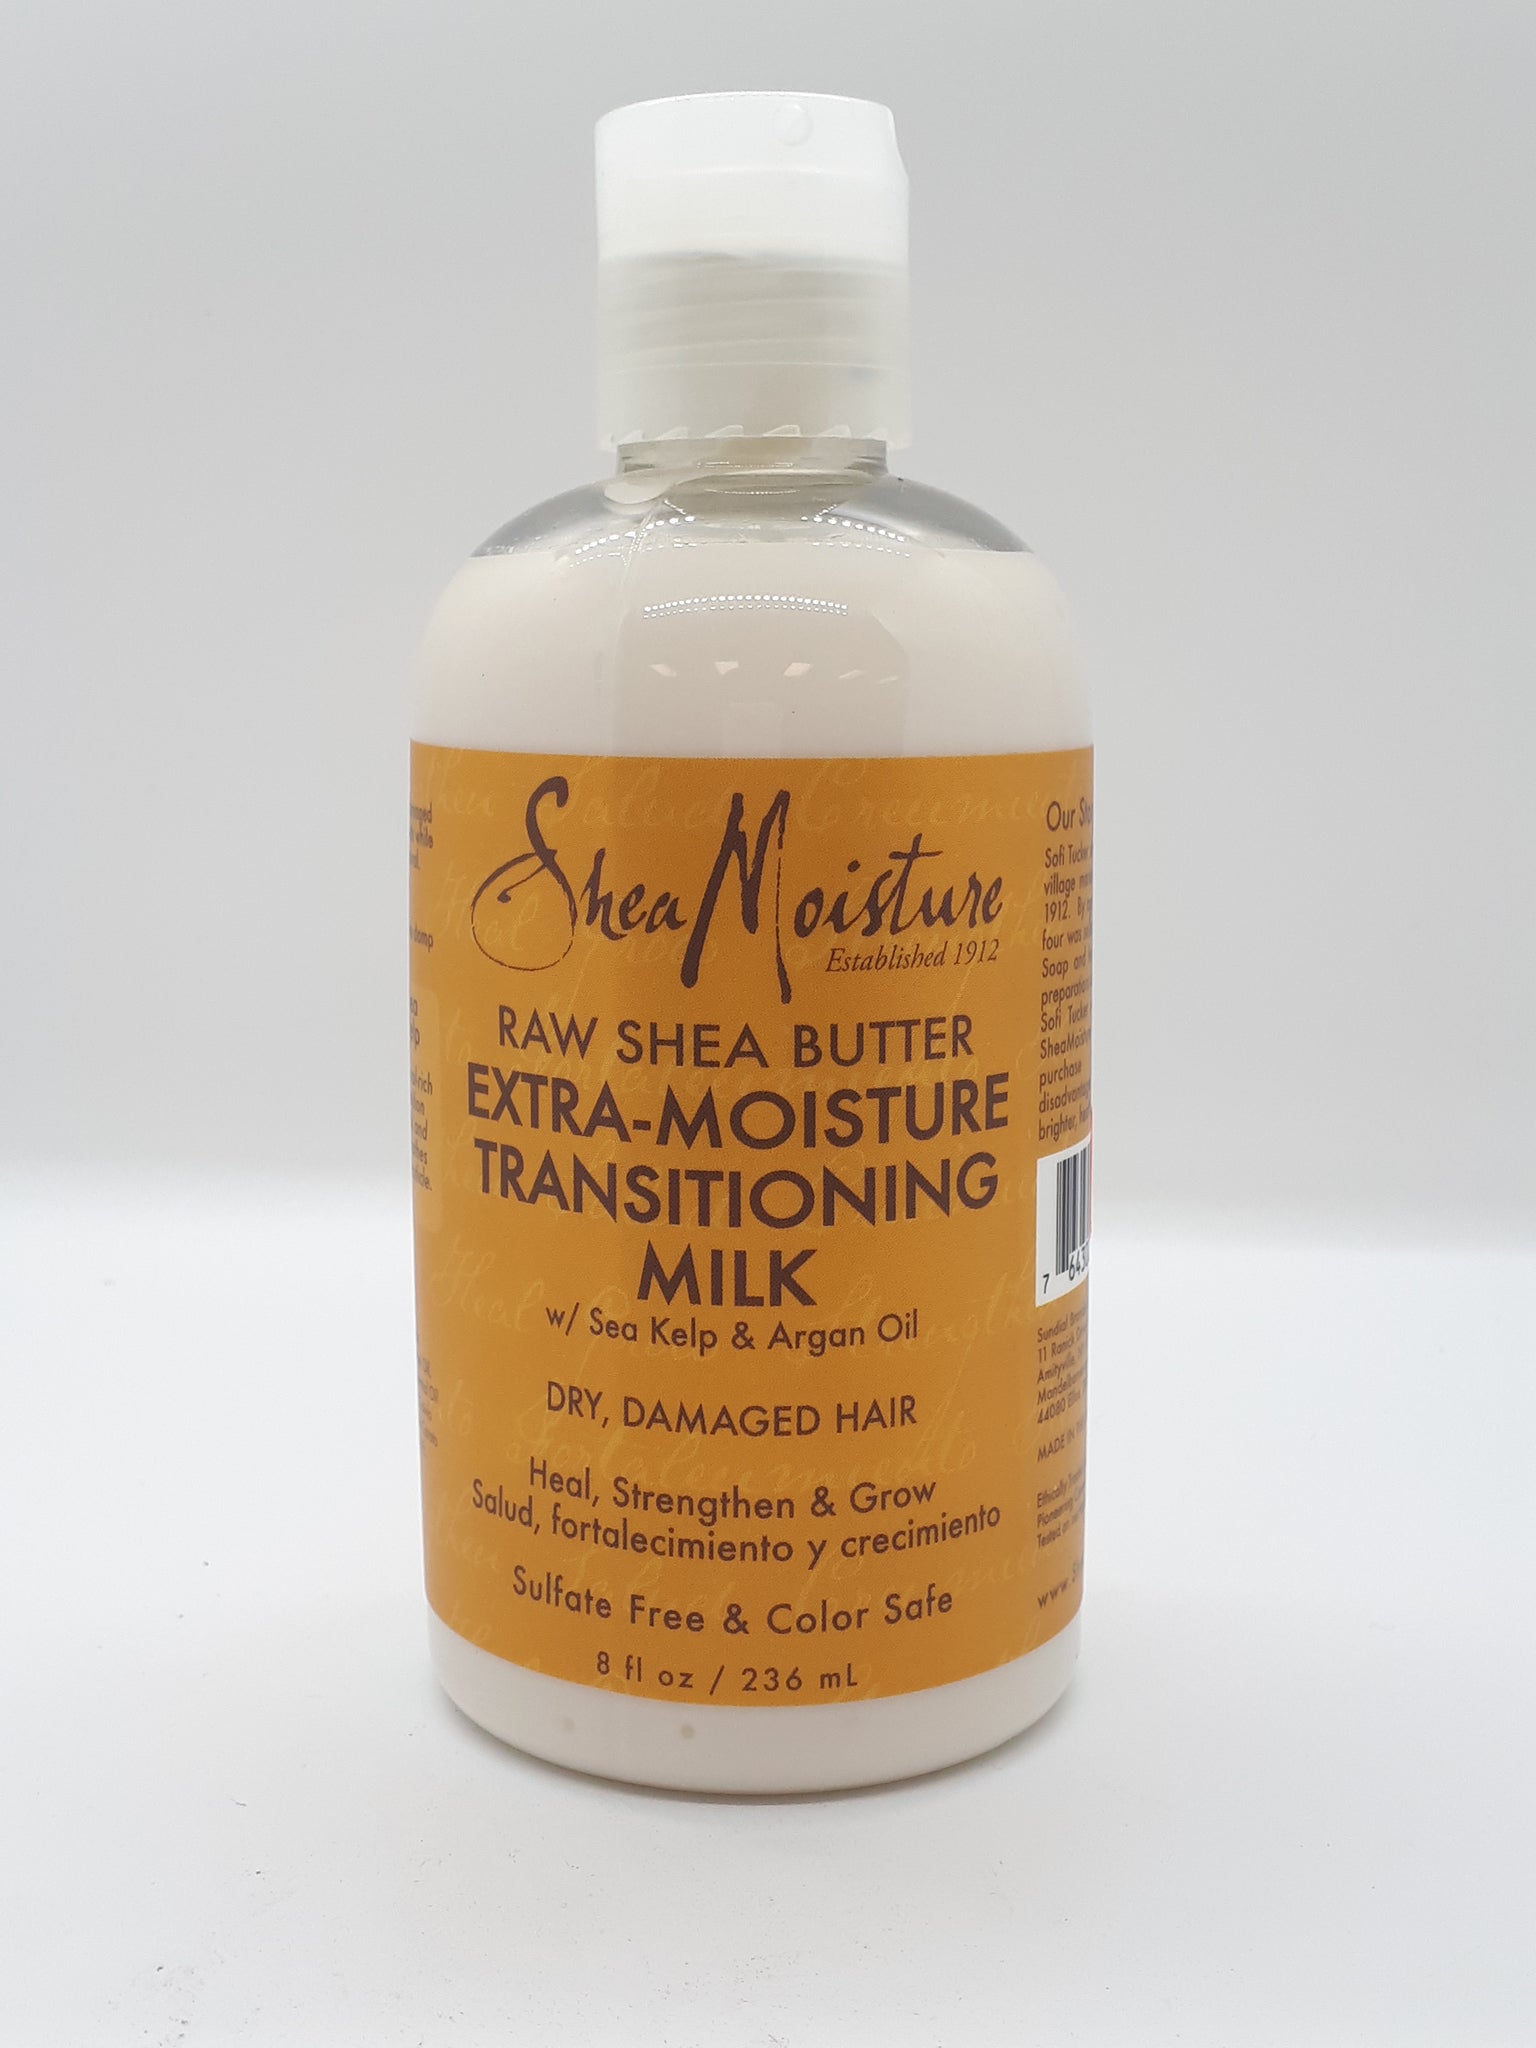 Raw Shea Butter Extra-Moisture Transitioning Milk